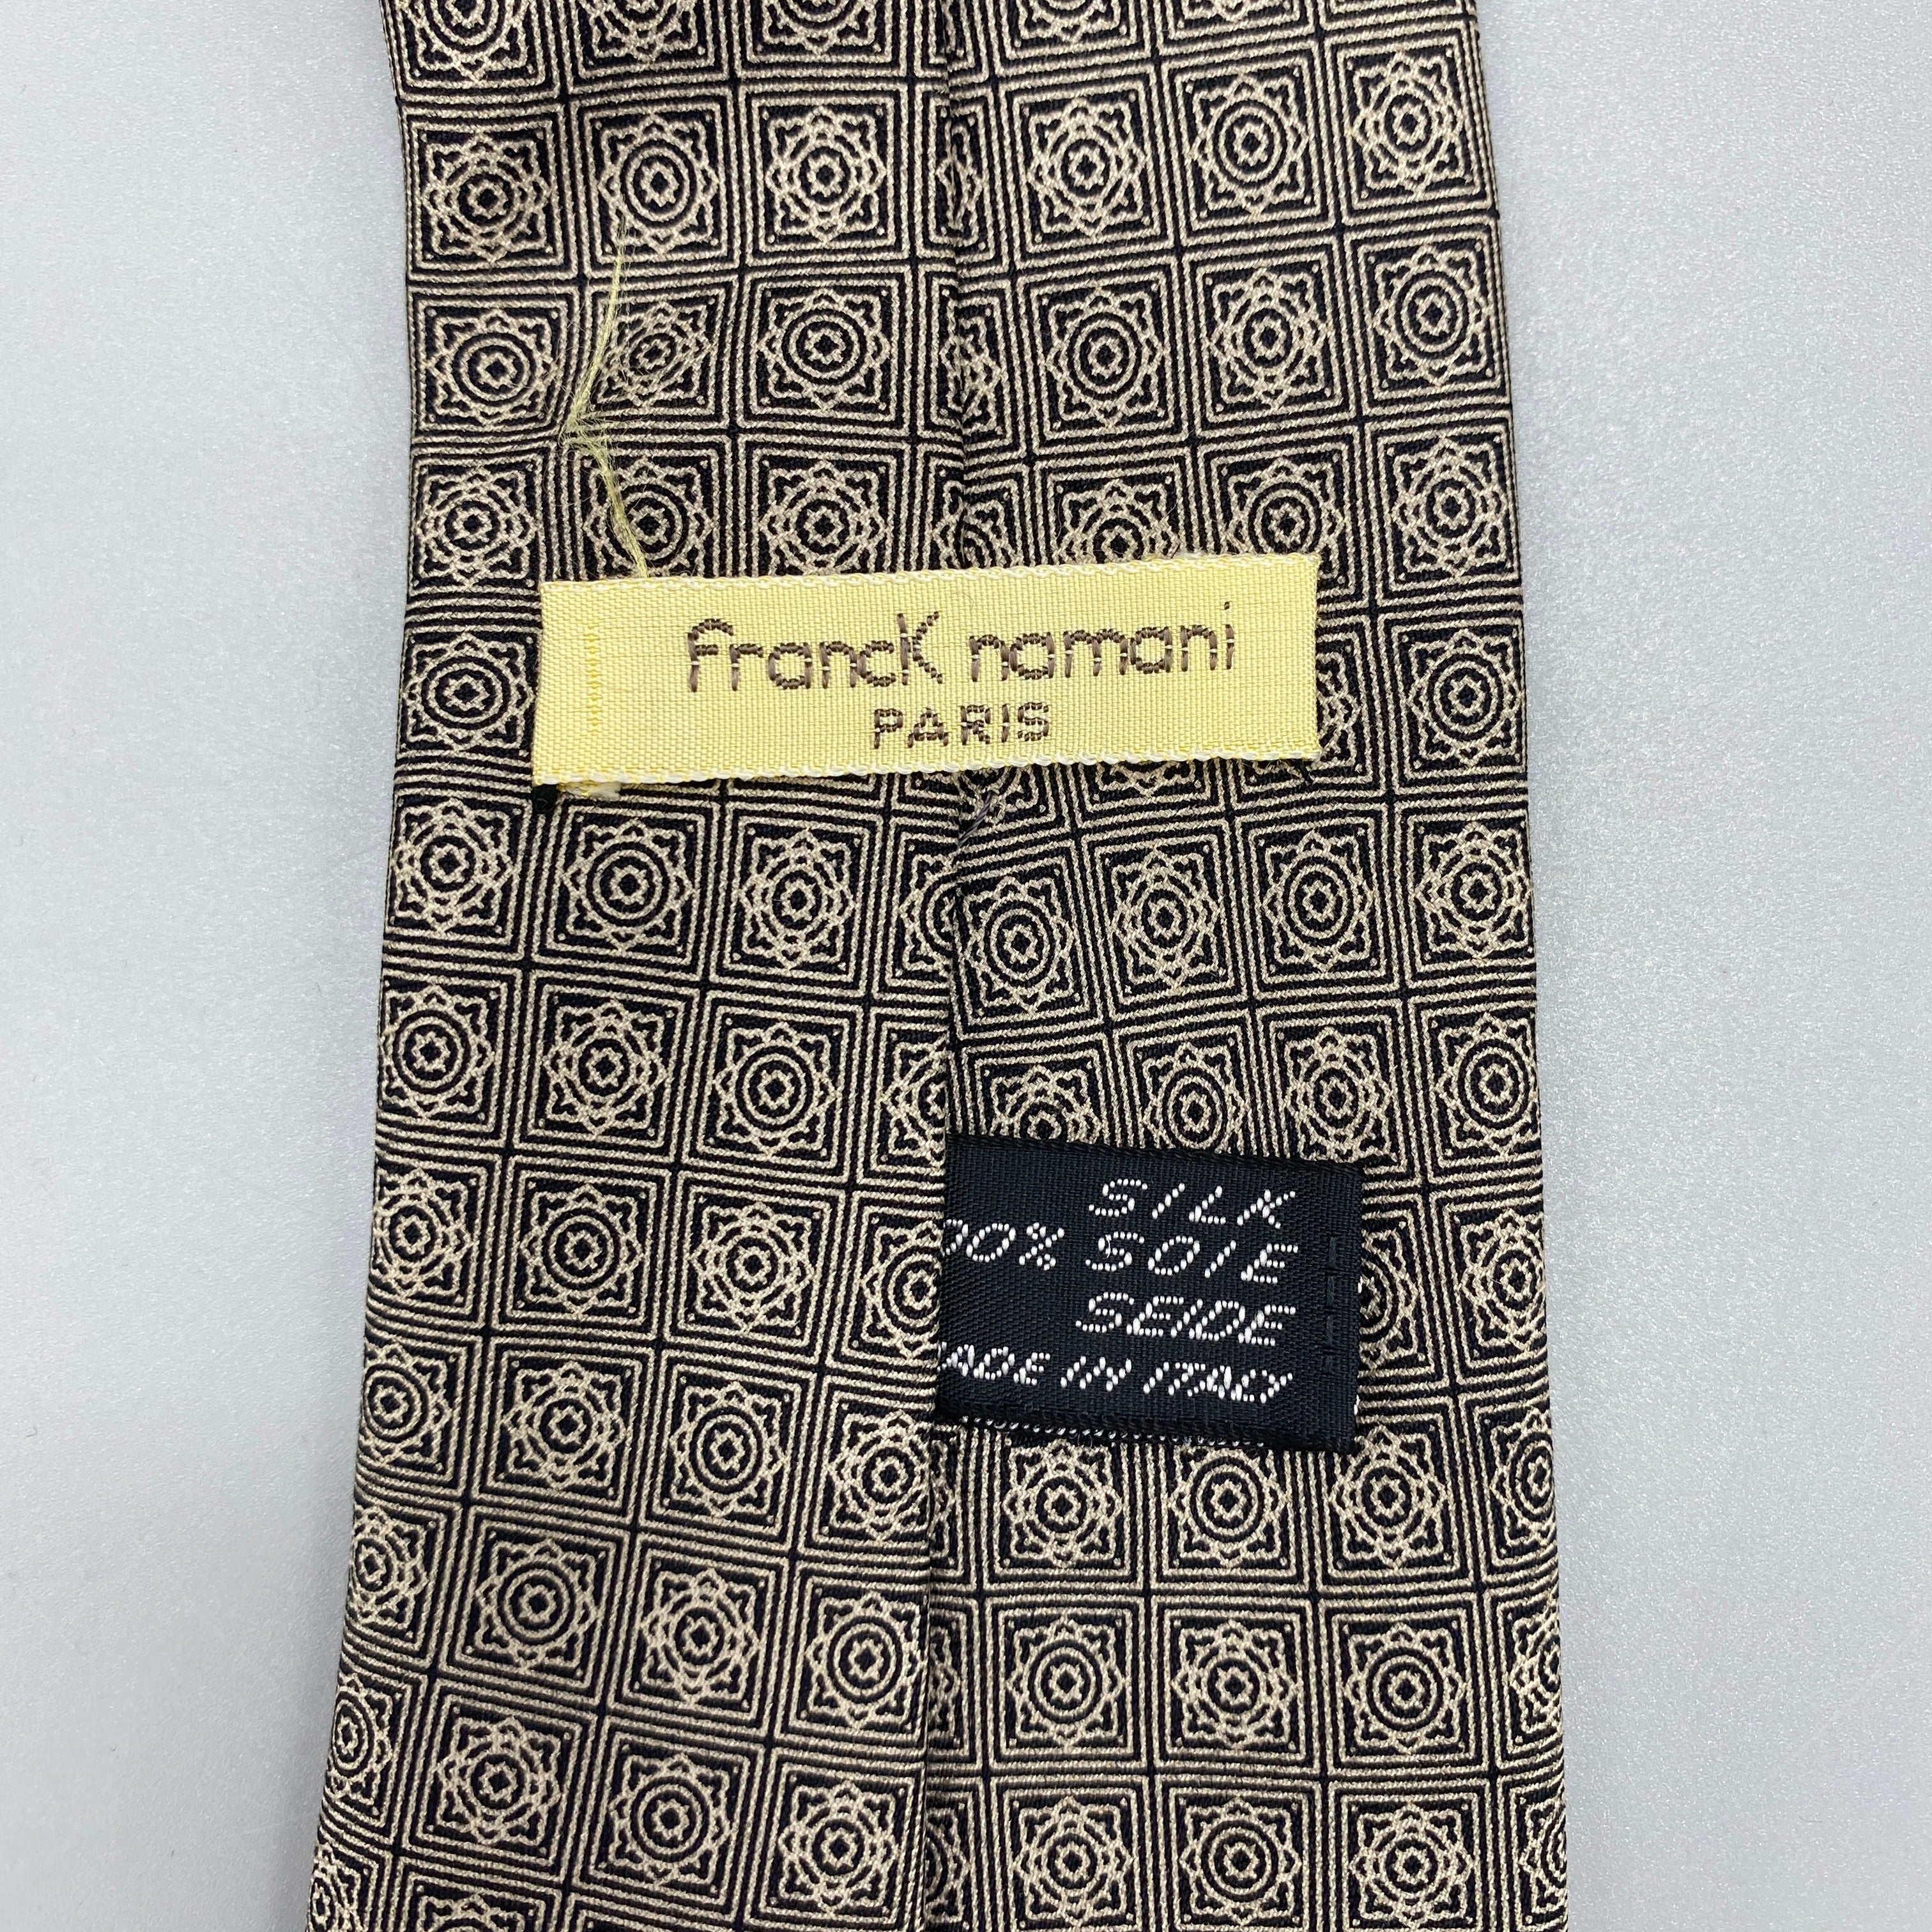 Cravate Franck Namani